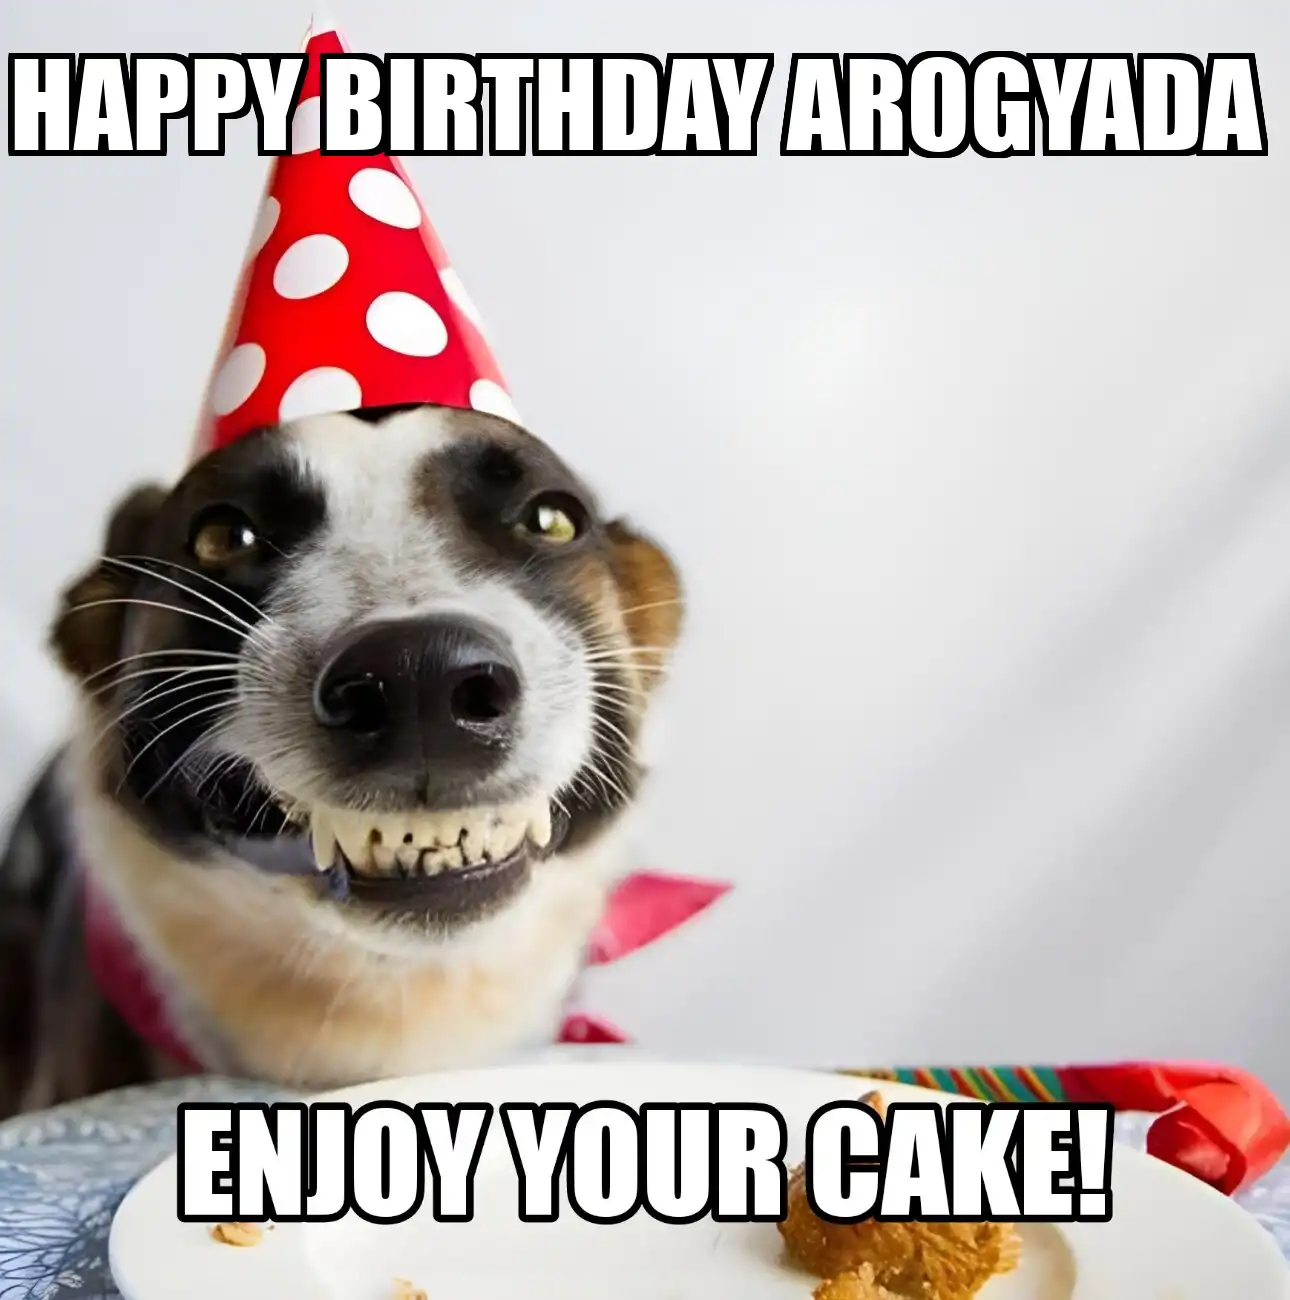 Happy Birthday Arogyada Enjoy Your Cake Dog Meme